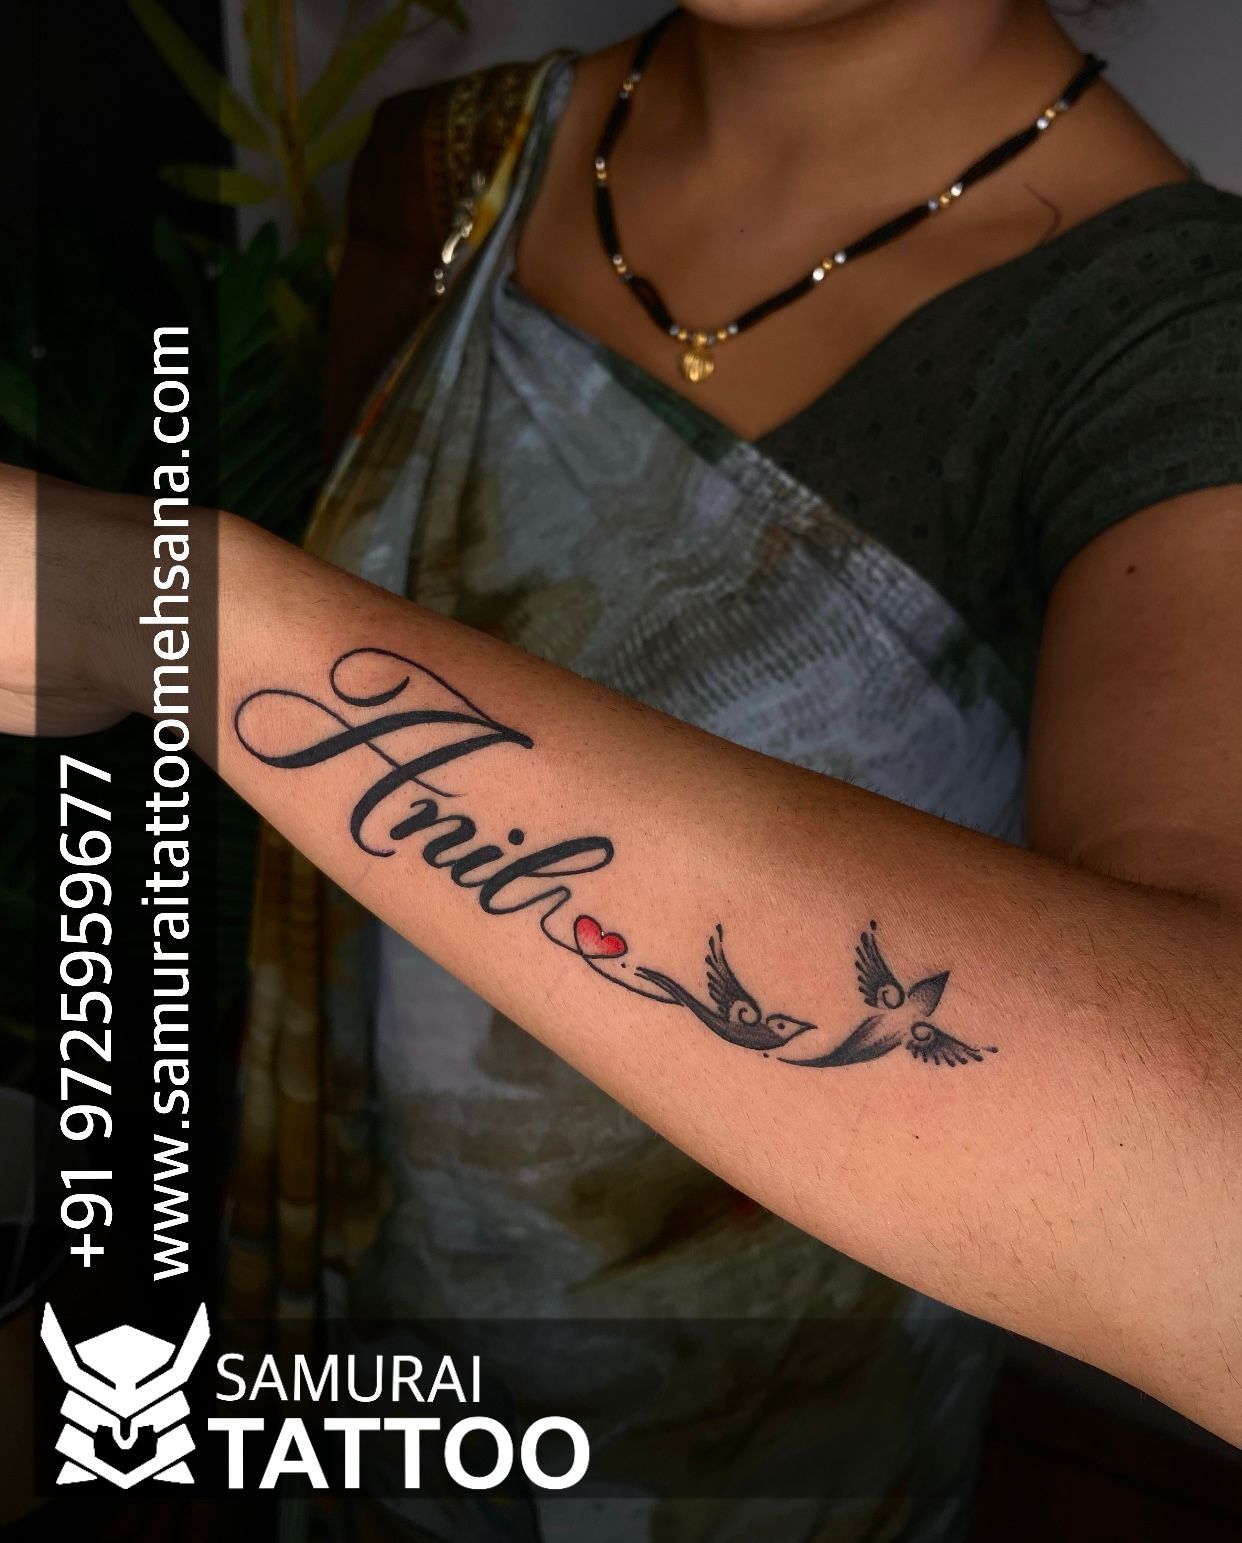 Tapas Adam Levine Tattoo on chest  Believe tattoos Sanskrit tattoo  Picture tattoos